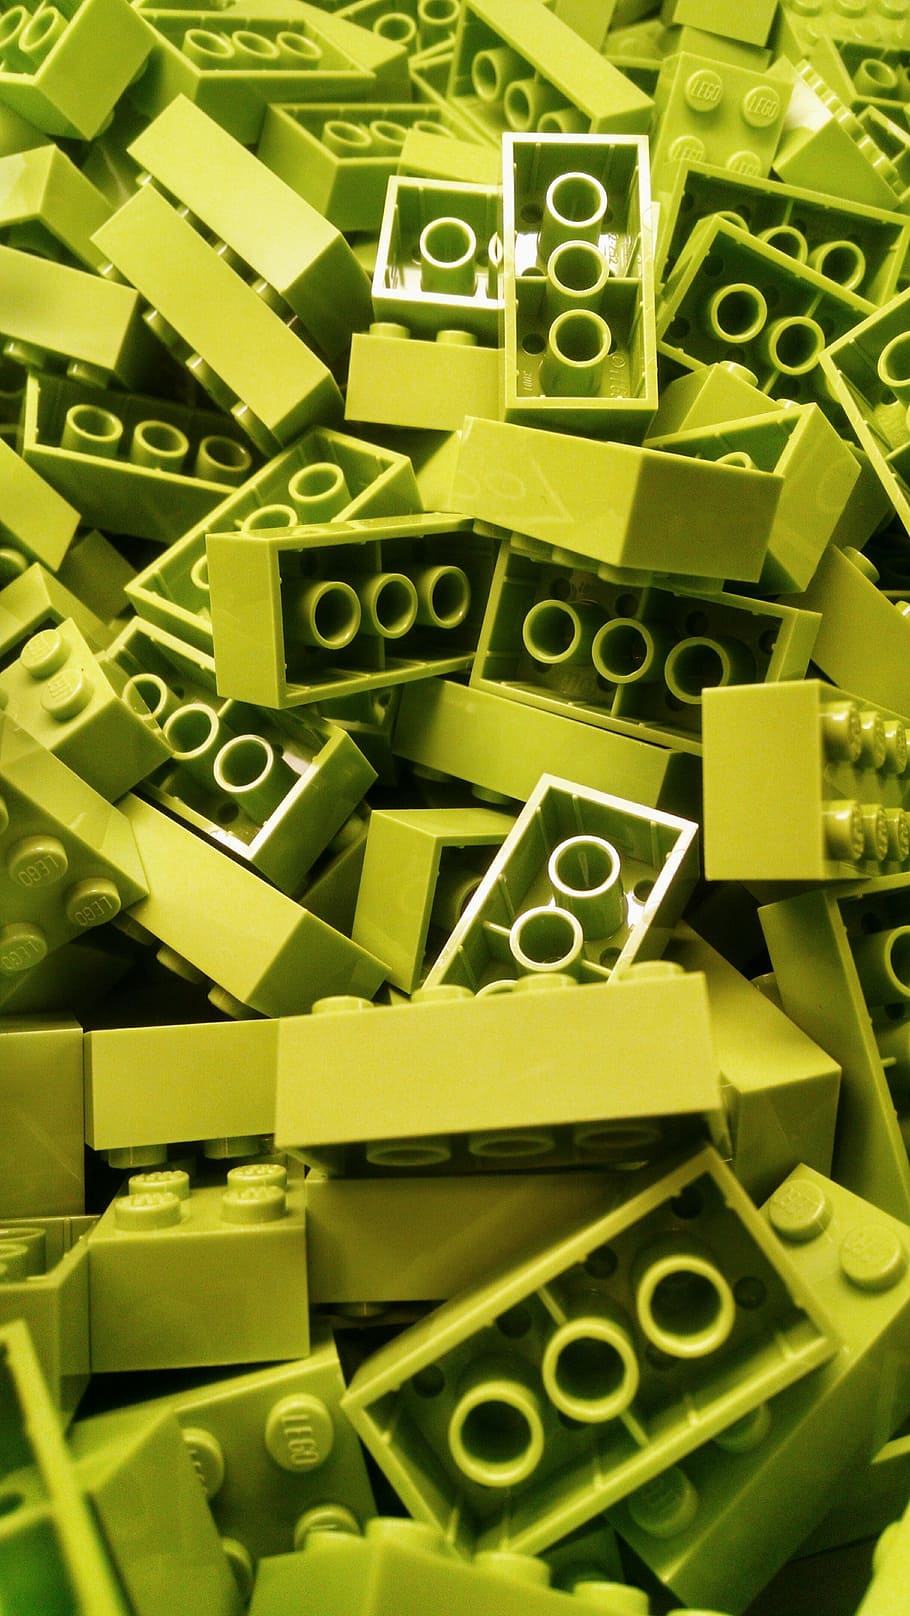 hijau, banyak blok bangunan, lego, blok bangunan, blok, warna-warni, warna, bata, menyenangkan, mainan